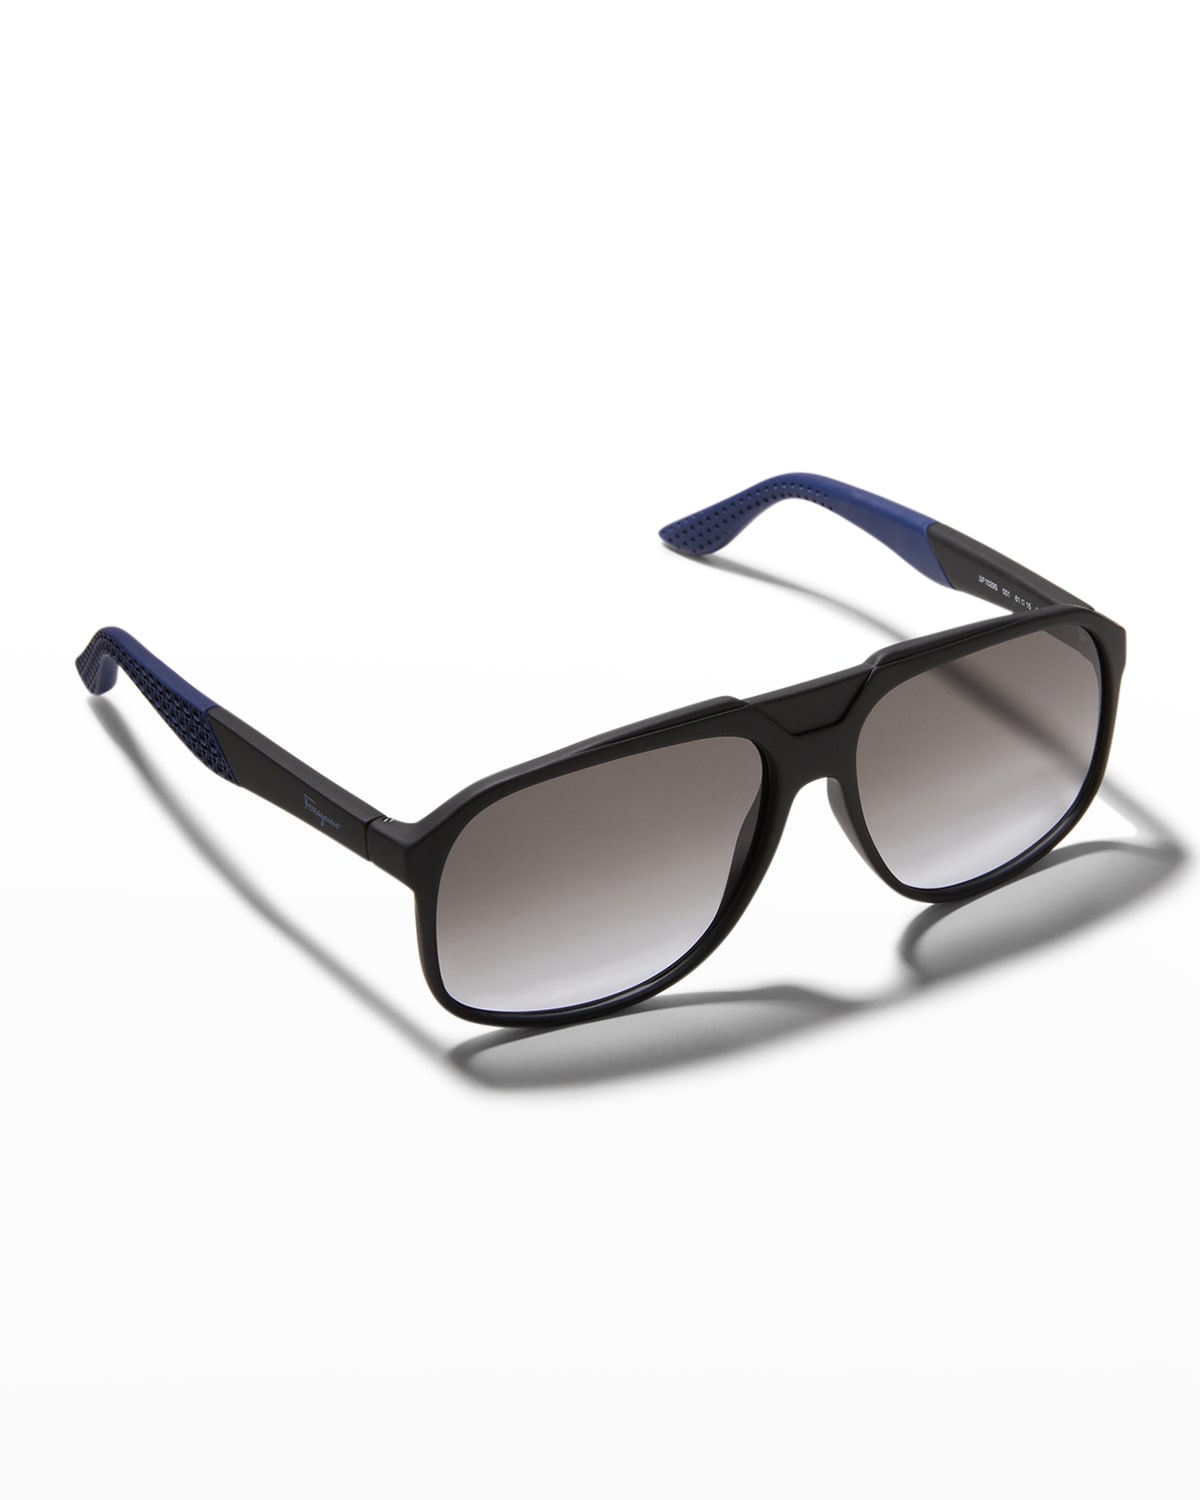 Men's Italian Lifestyle Gancini Aviator Sunglasses